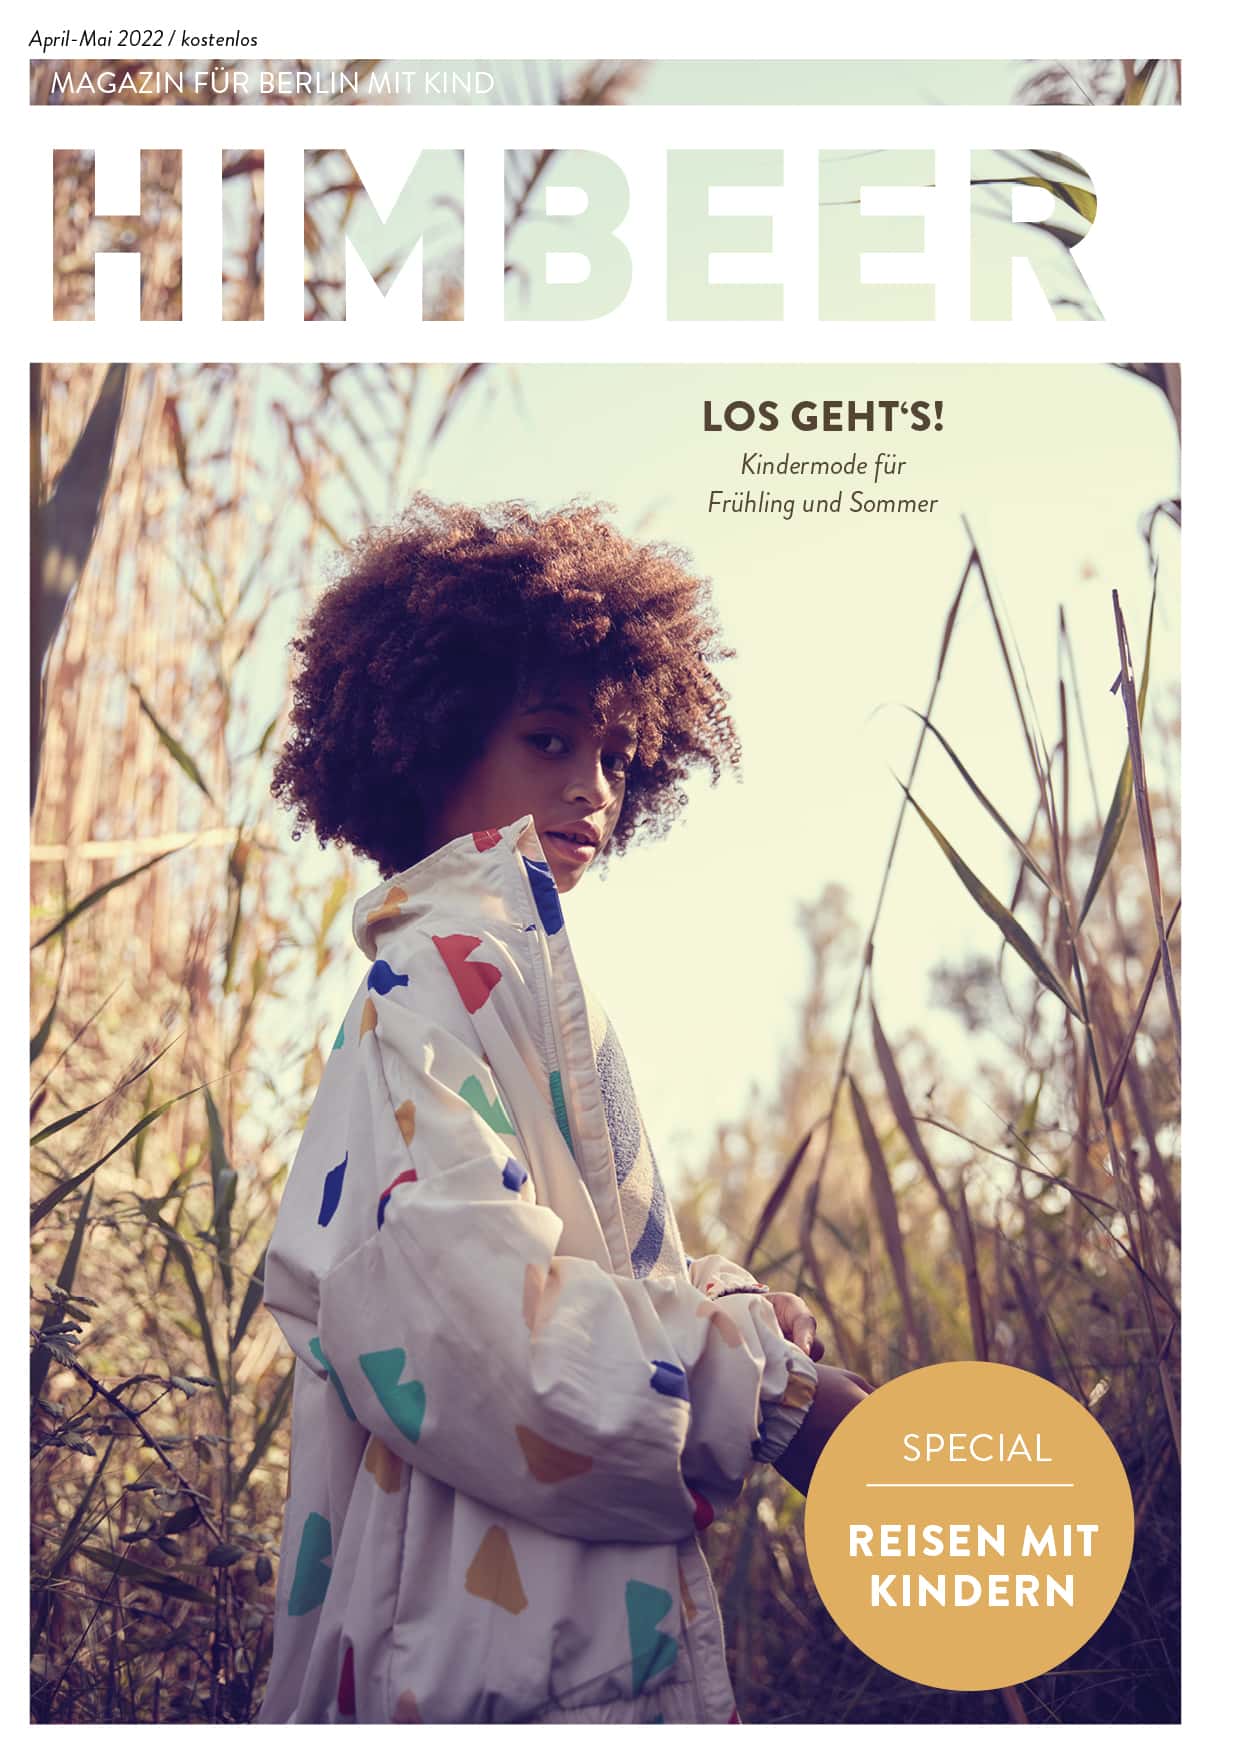 HIMBEER Magazin für BERLIN MIT KIND April-Mai 2022